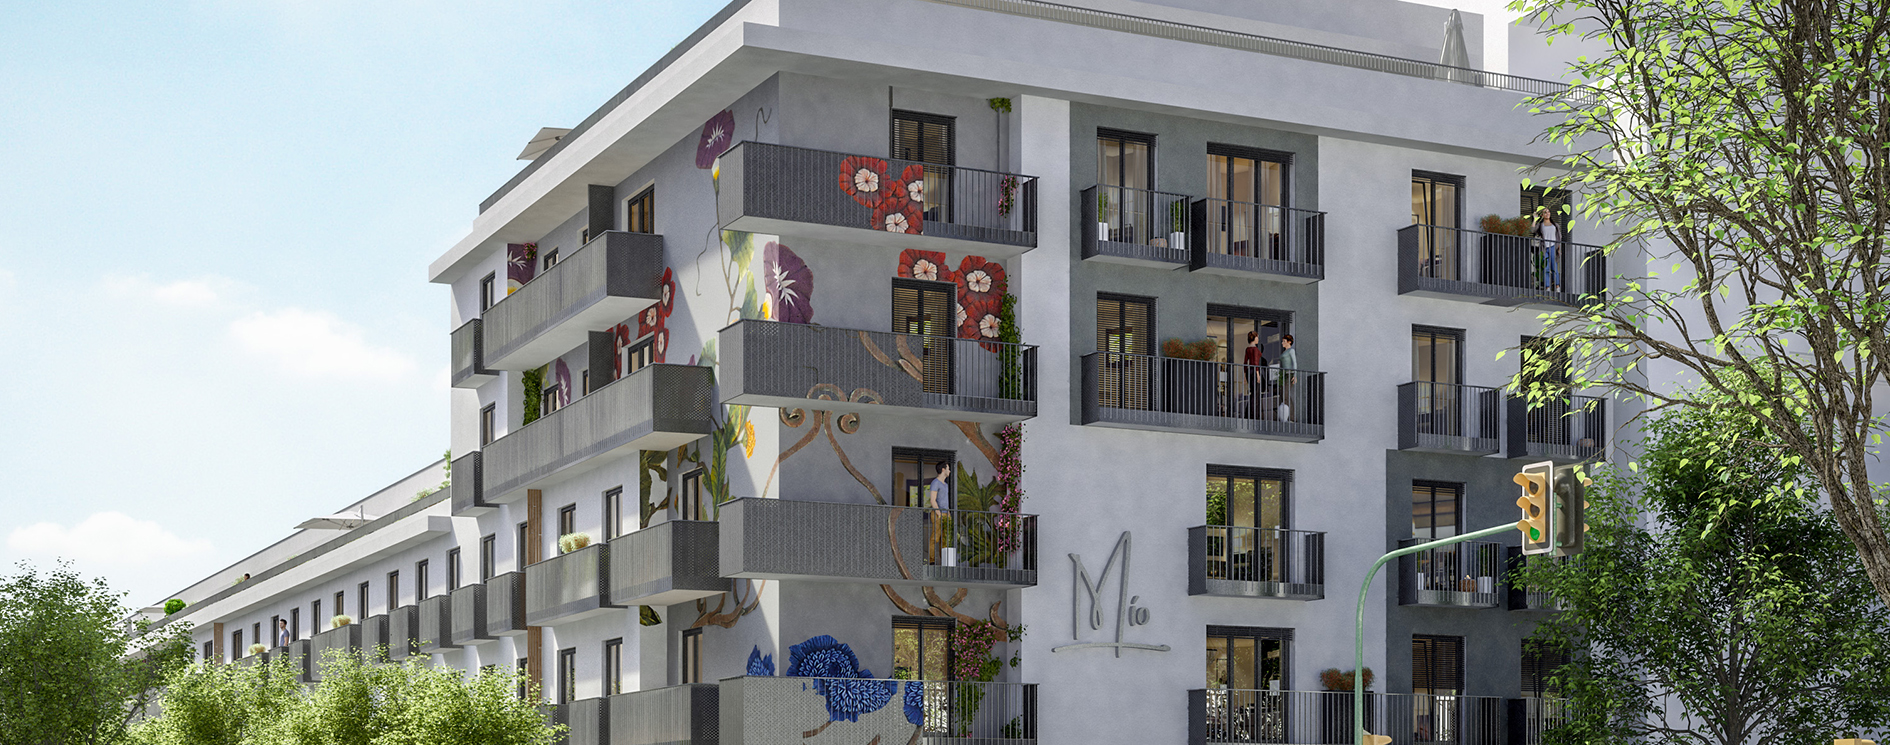 Domus Vivendi startet Bauarbeiten für Wohnprojekt „Mío“ in Palma de Mallorca